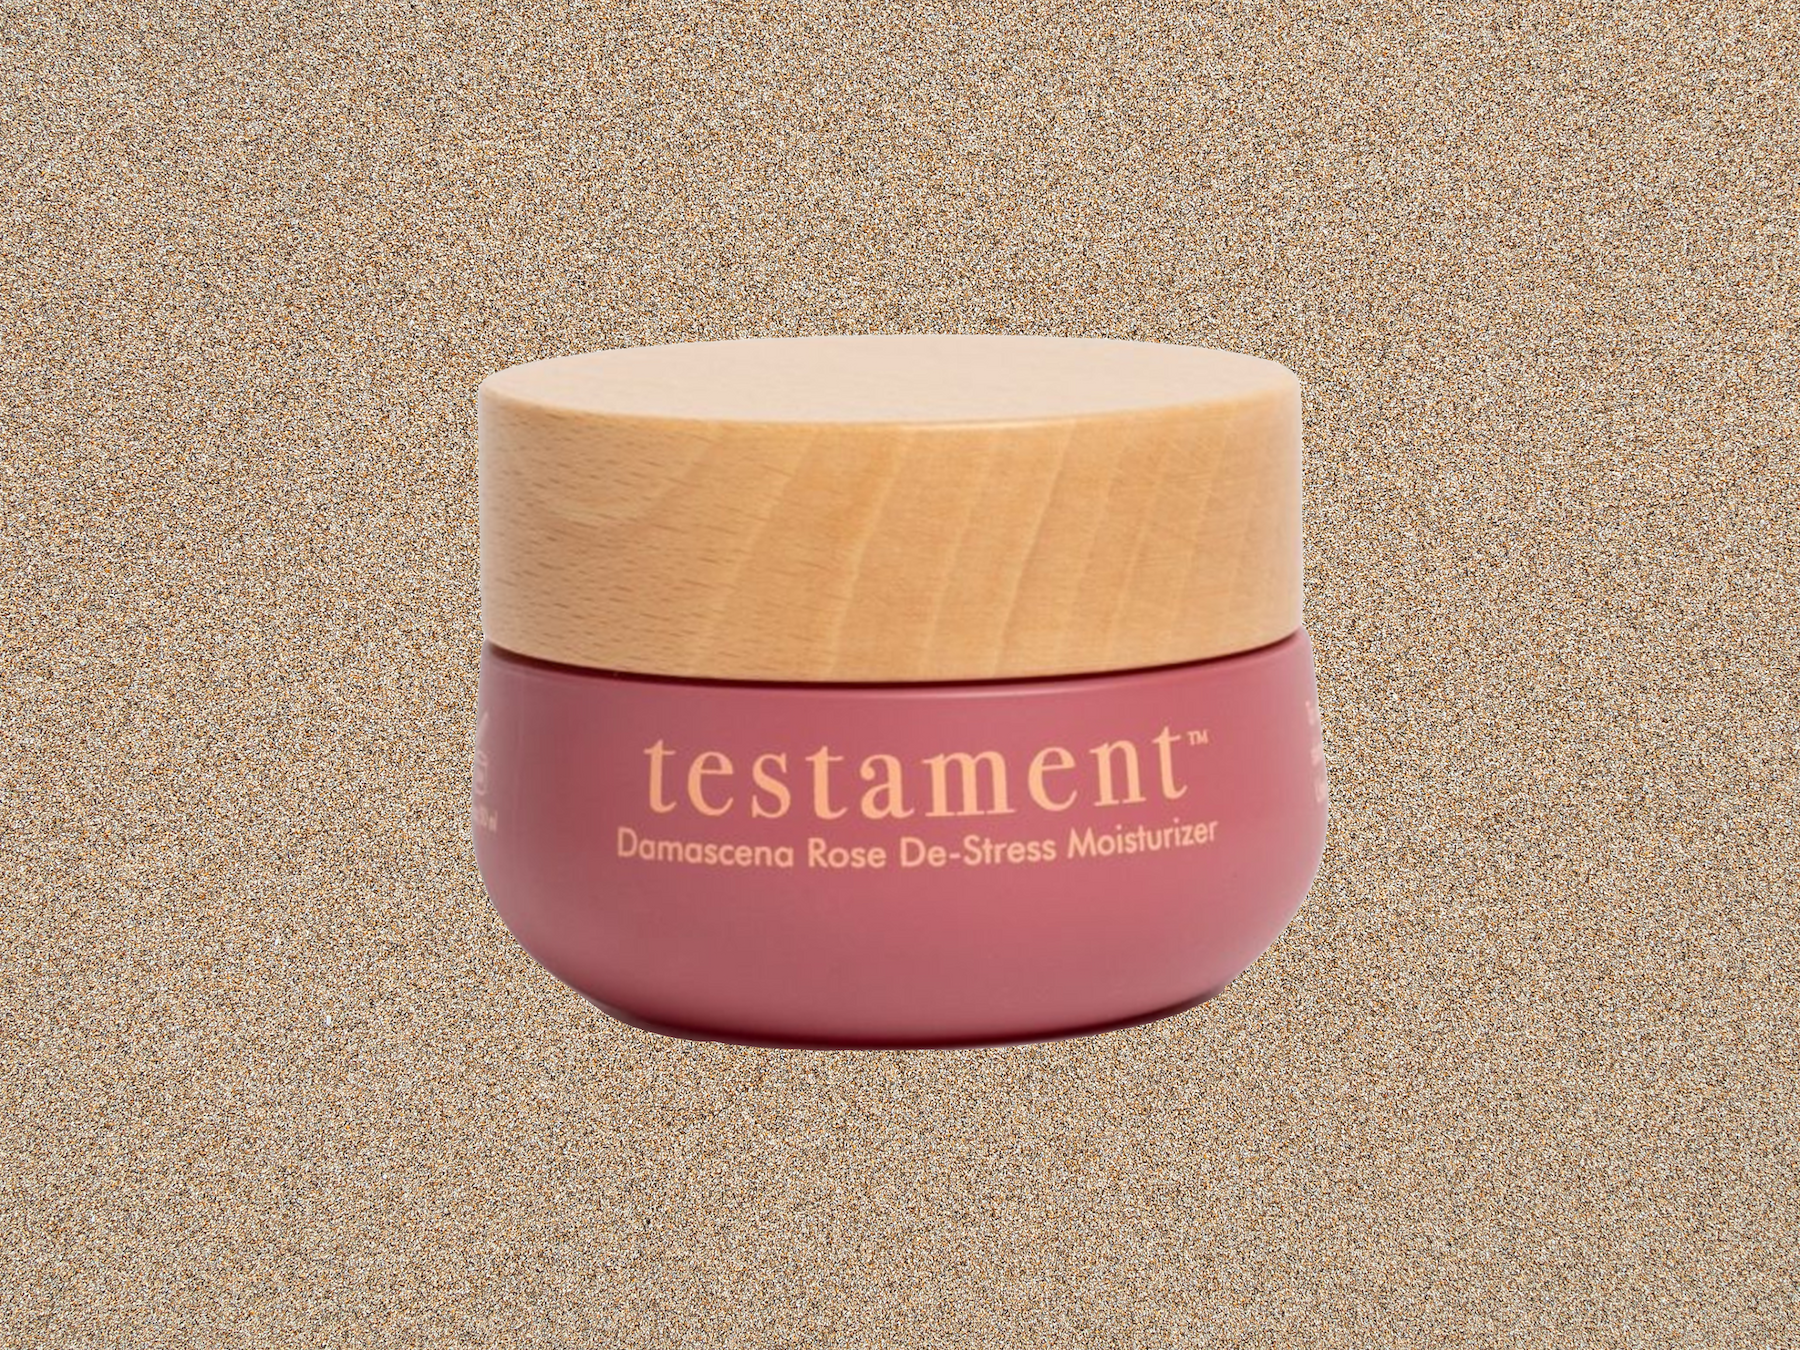 Product of the Week: Testament Beauty De-Stress Moisturizer